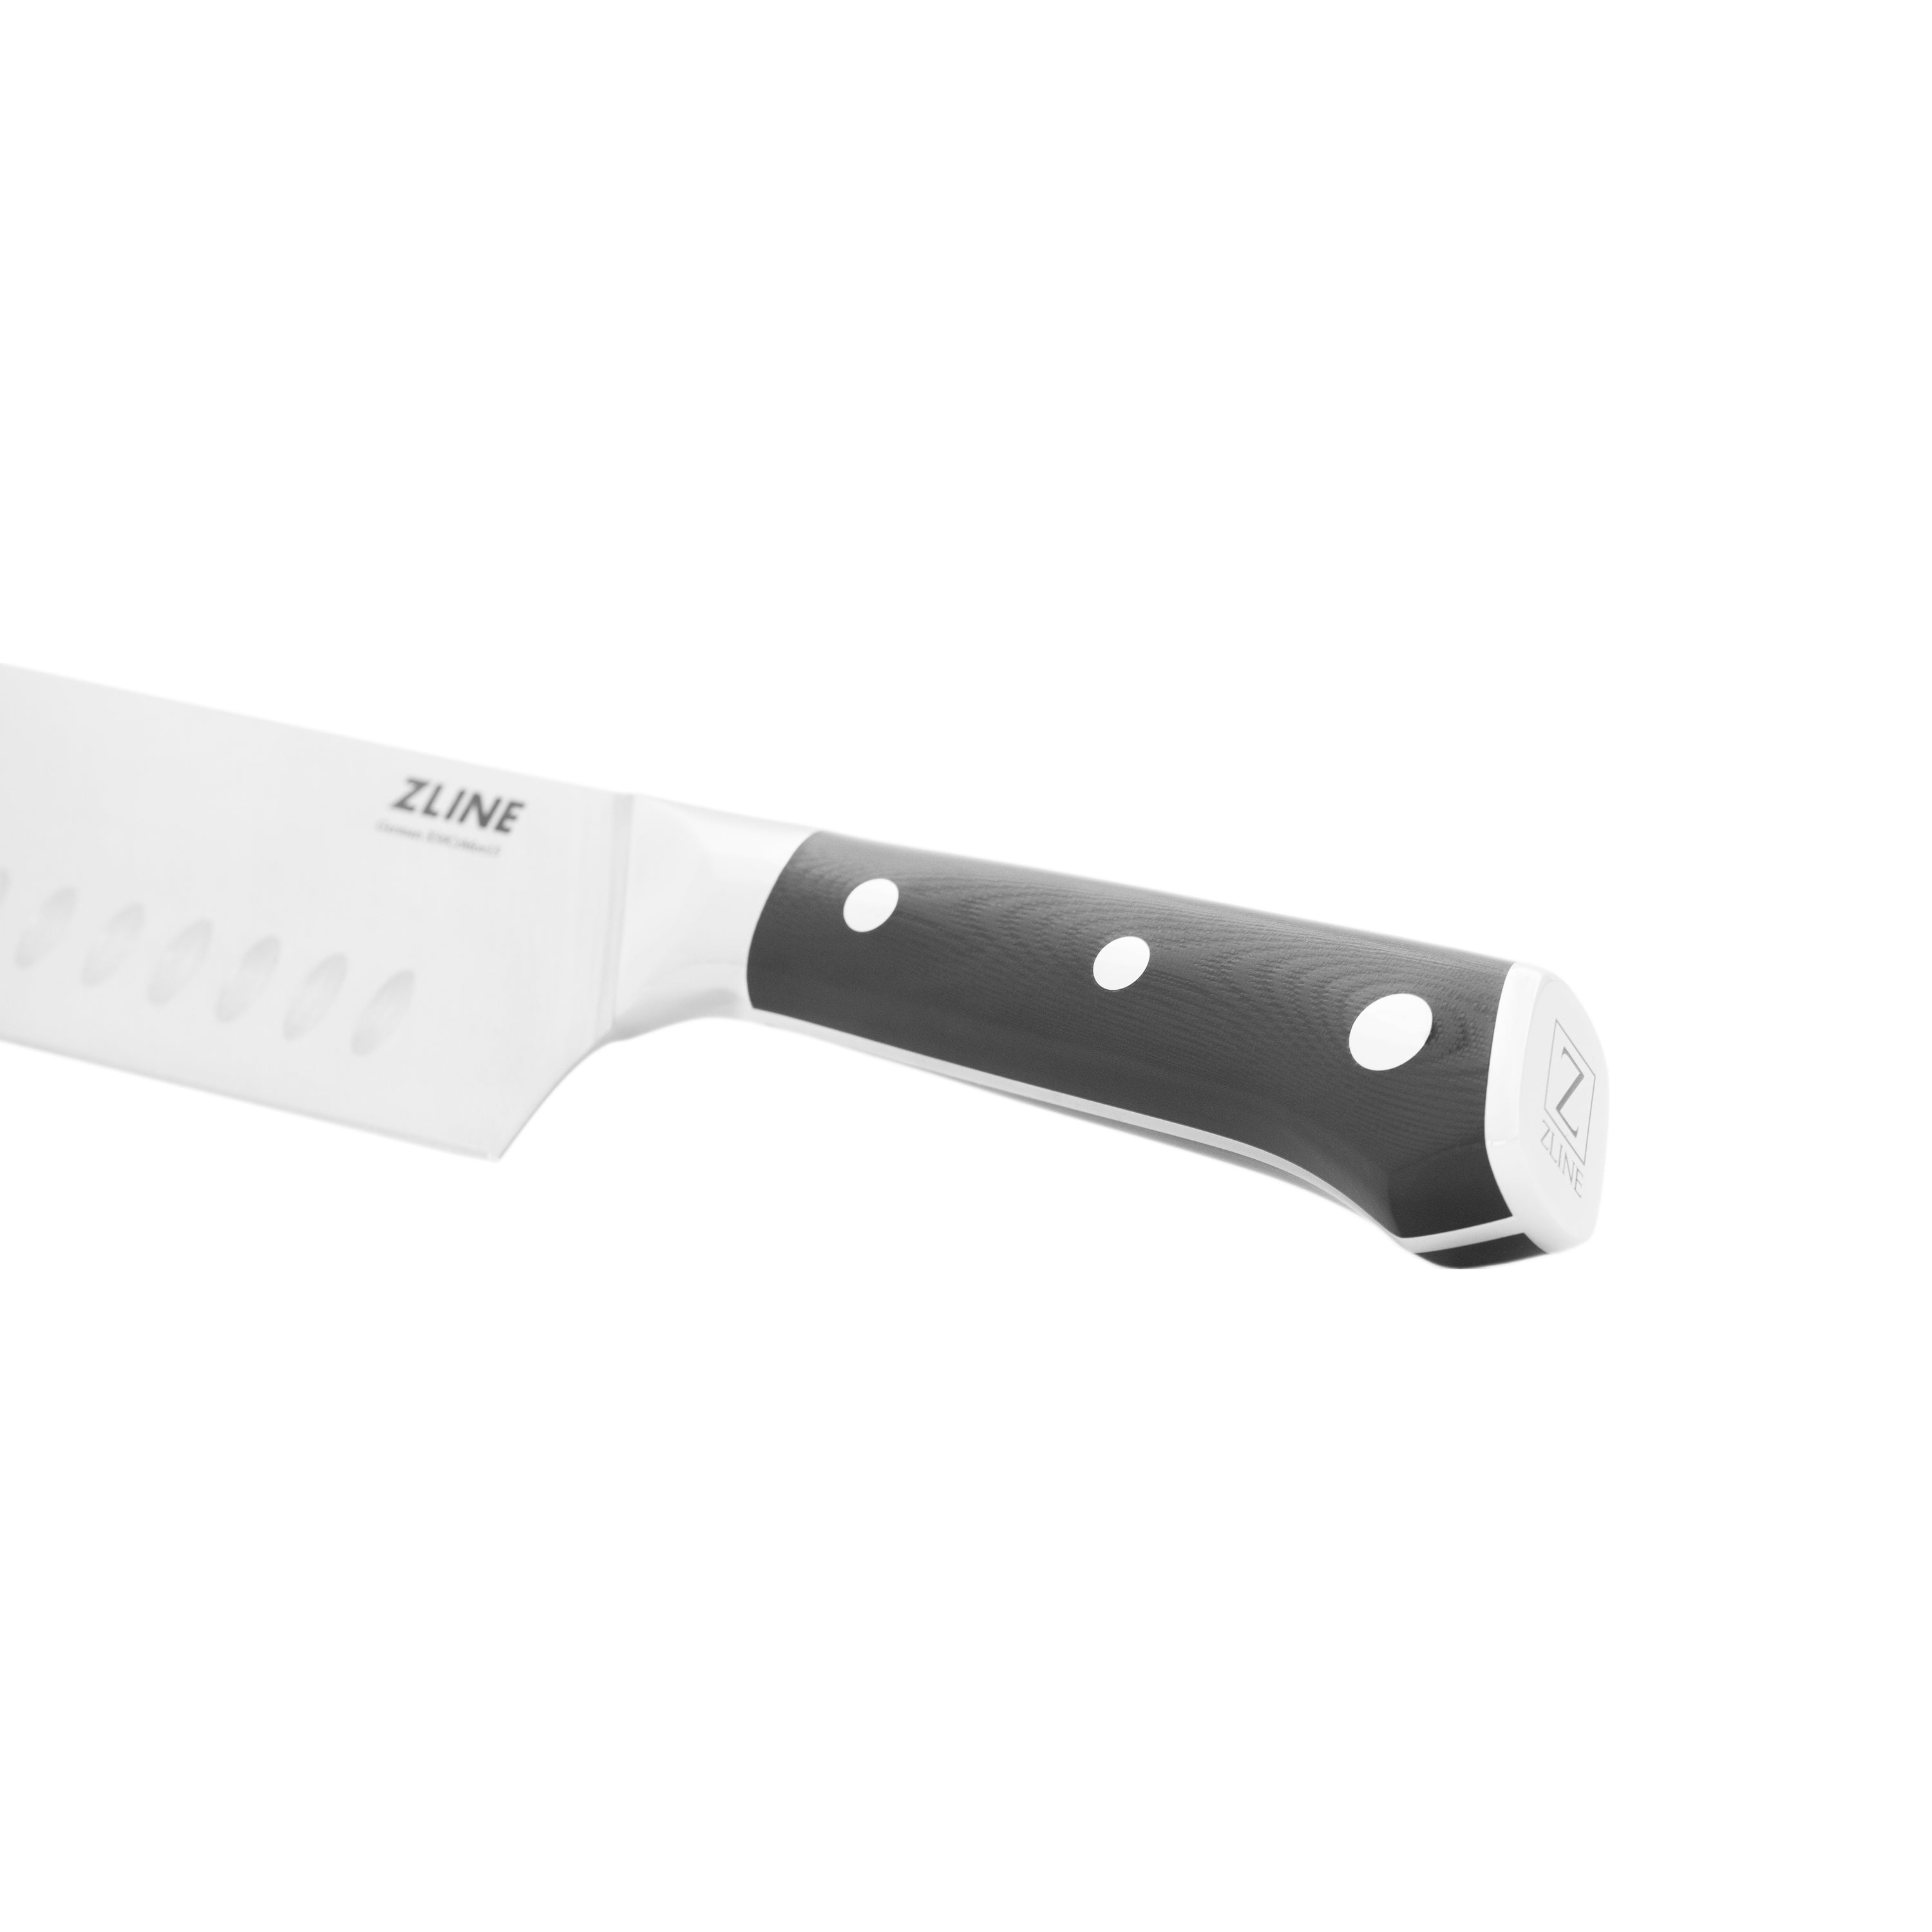 ZLINE 8‚Äö√Ñ√∂‚àö√ë‚àöœÄ Professional German Steel Chef‚Äö√Ñ√∂‚àö√ë‚àö¬•s Knife